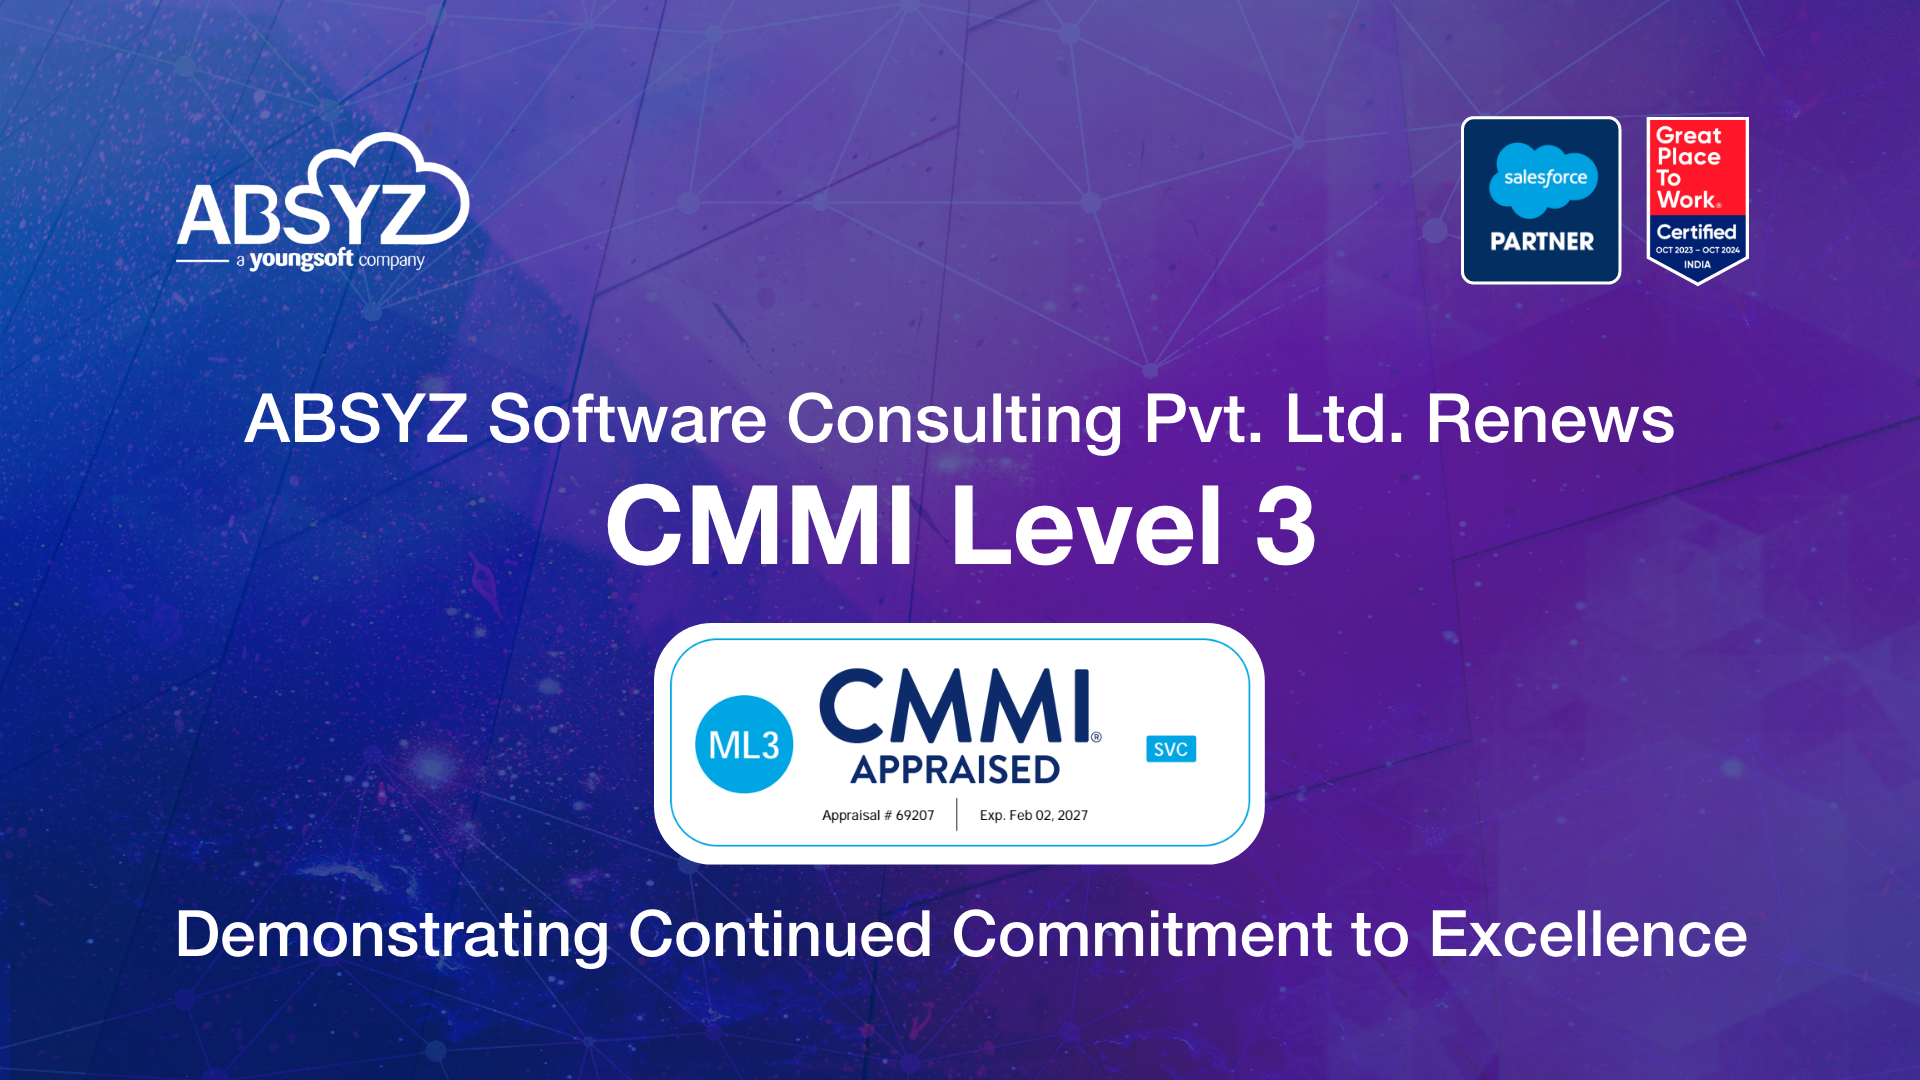 ABSYZ Software Consulting Pvt. Ltd. Renews CMMI Level 3 Accreditation - PNN Digital